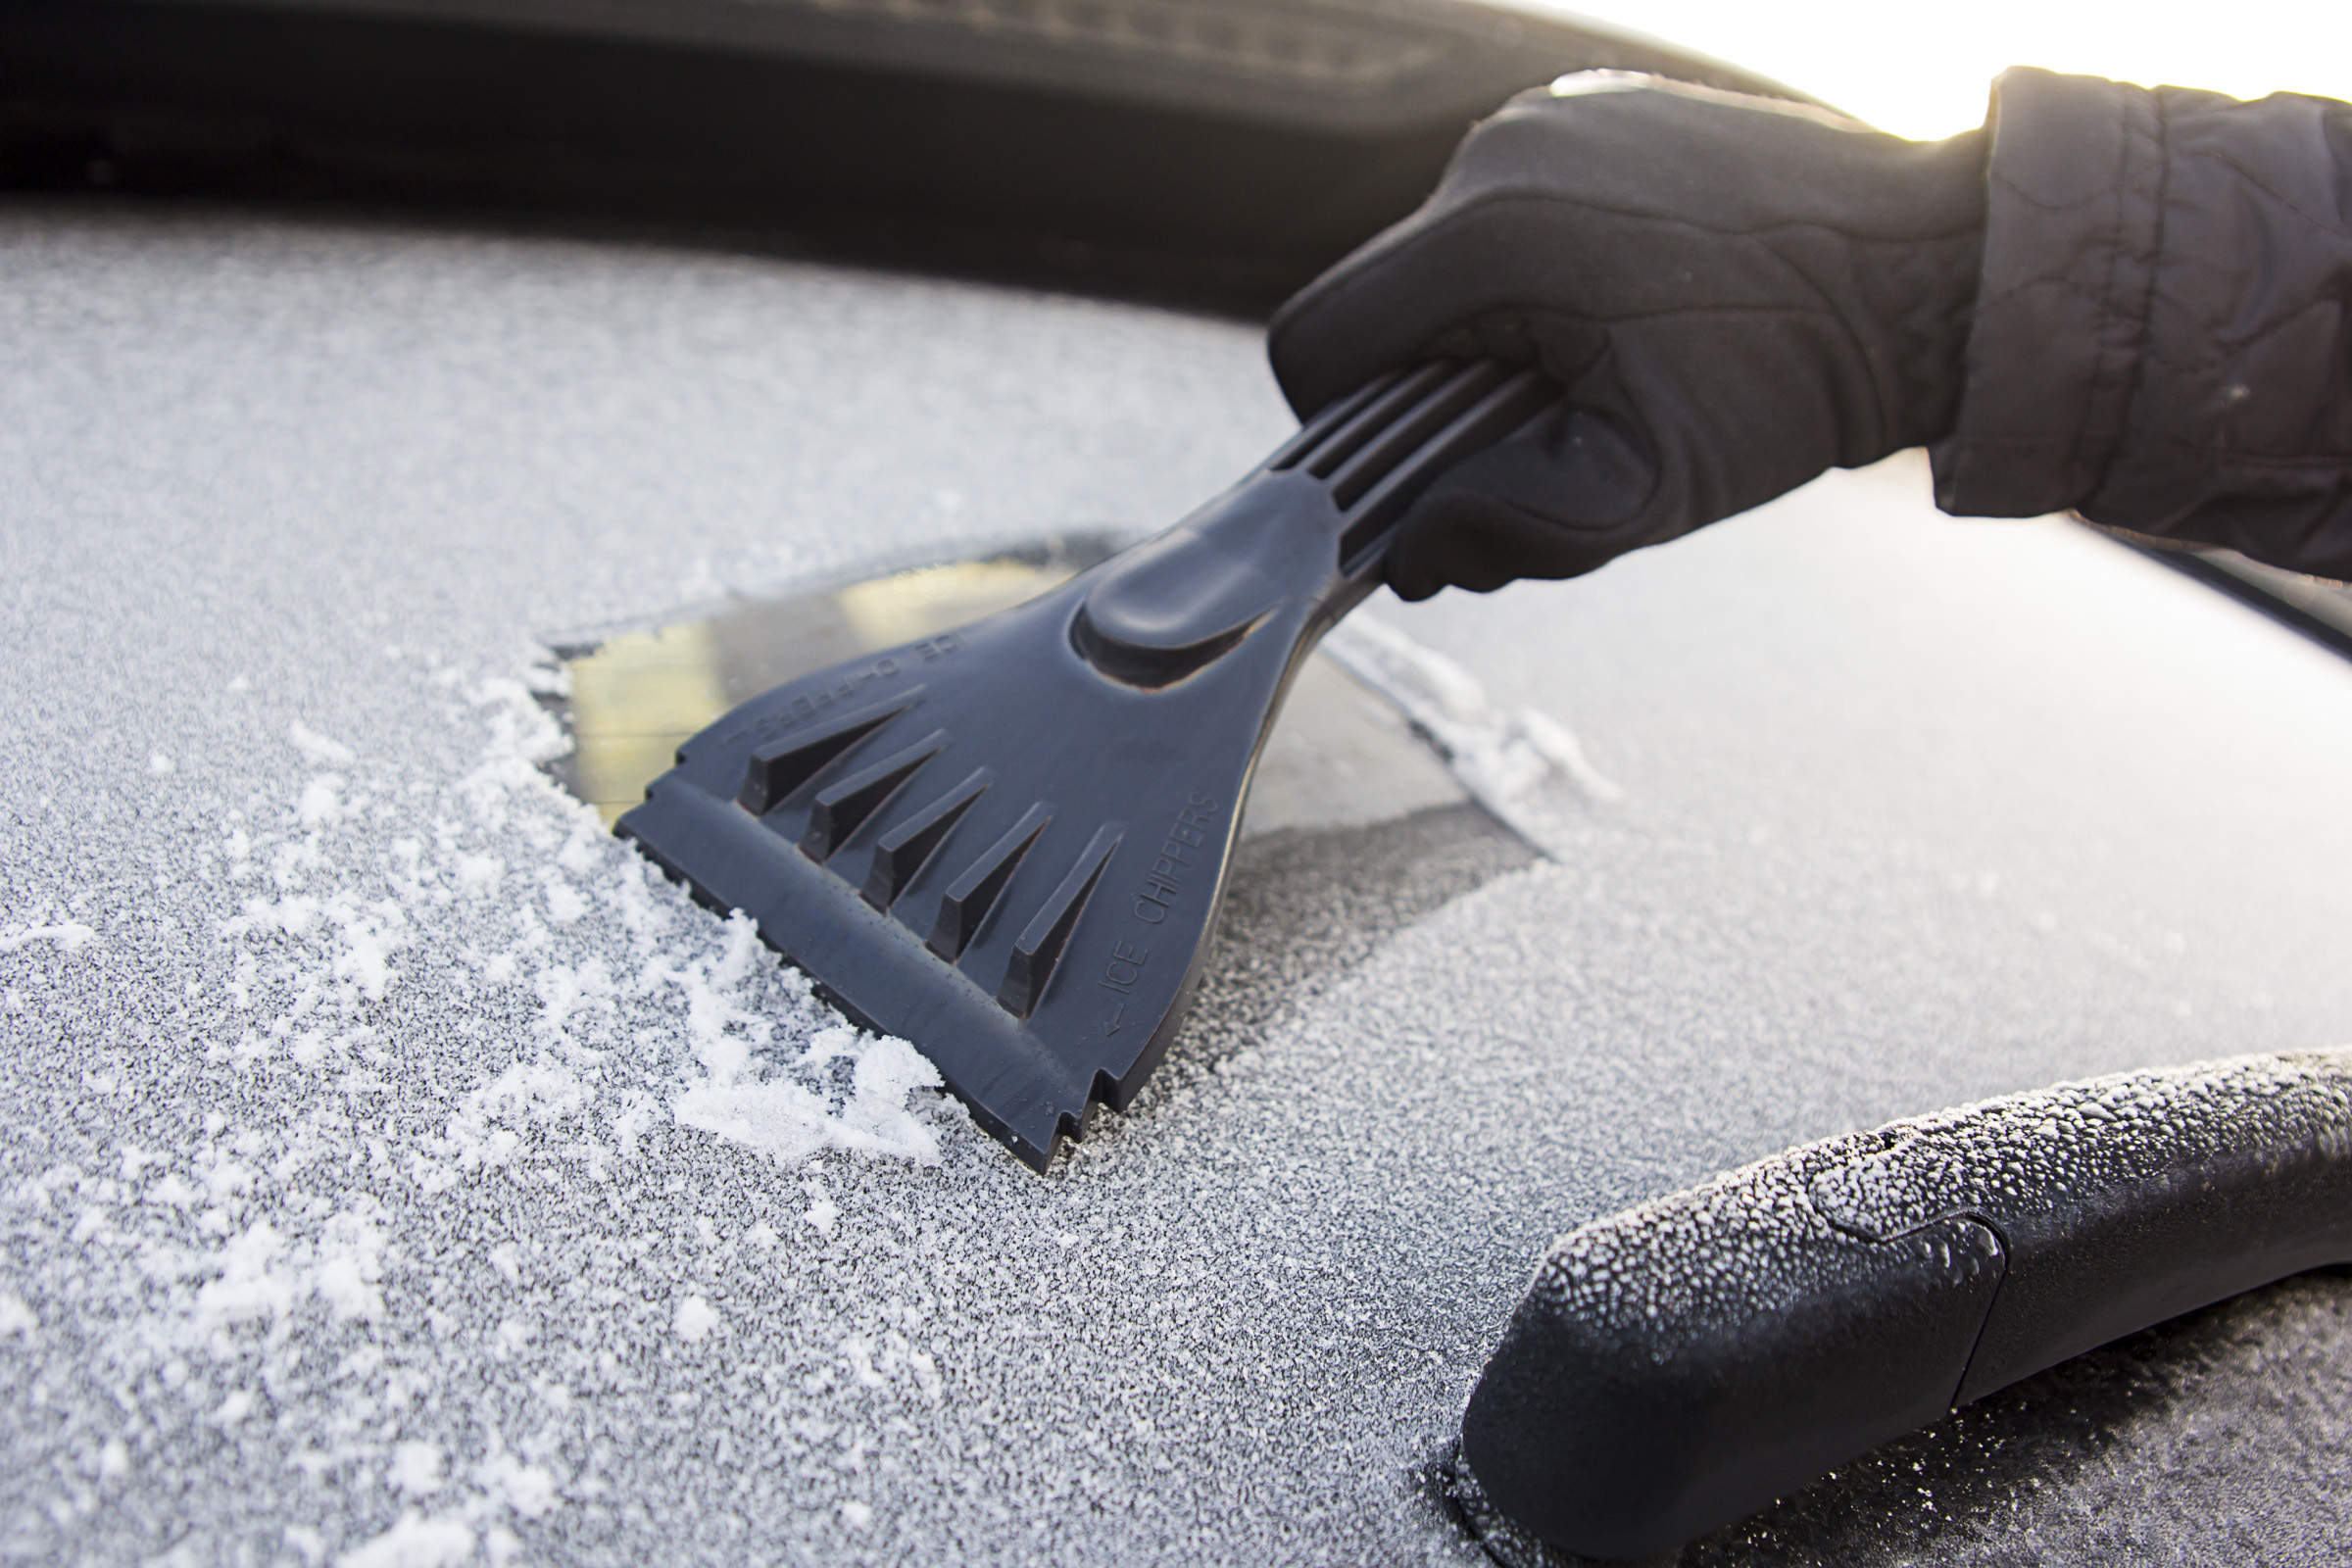 Auto Drive 9 Ice Ripper™ Ergonomic Window Ice Scraper Tool, Black